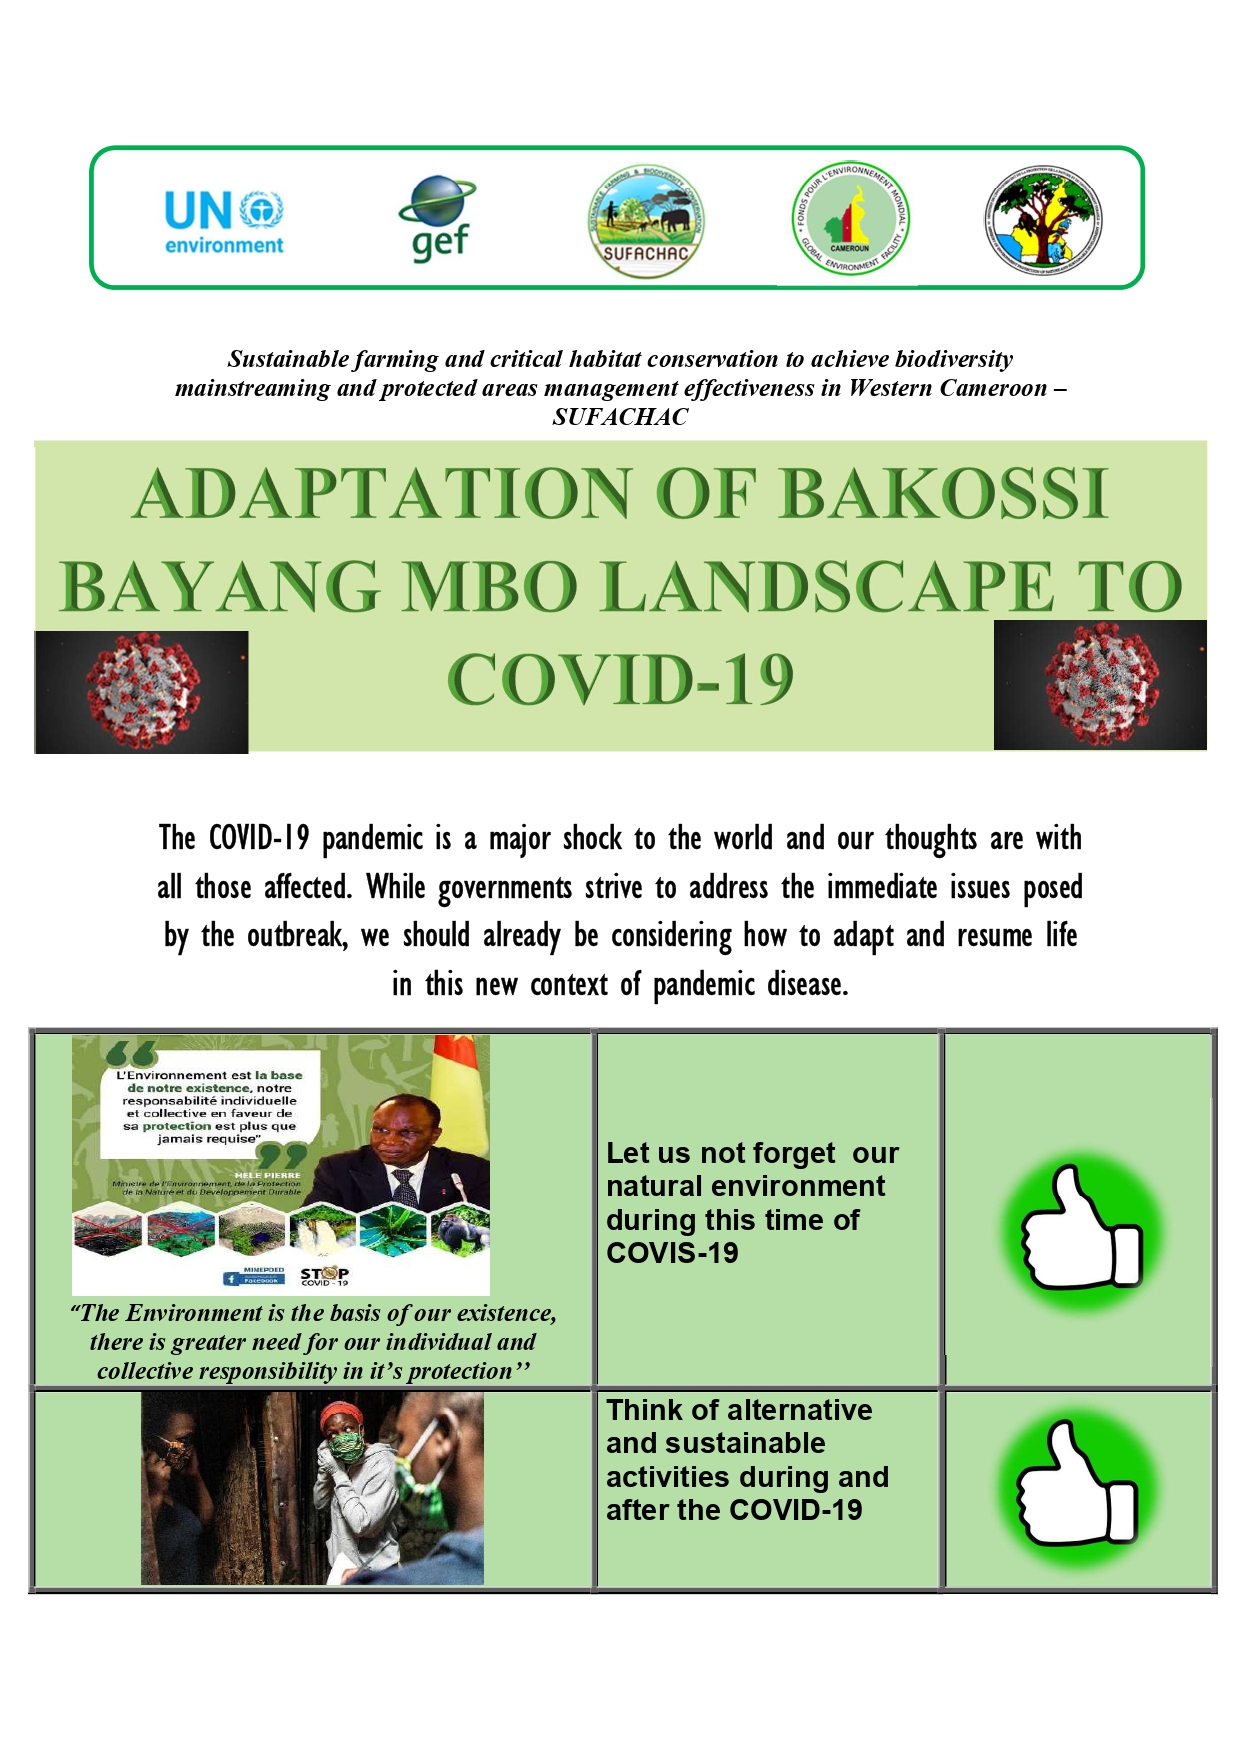 ADAPTATION OF BAKOSSI BAYANG MBO LANDSCAPE TO COVID-19